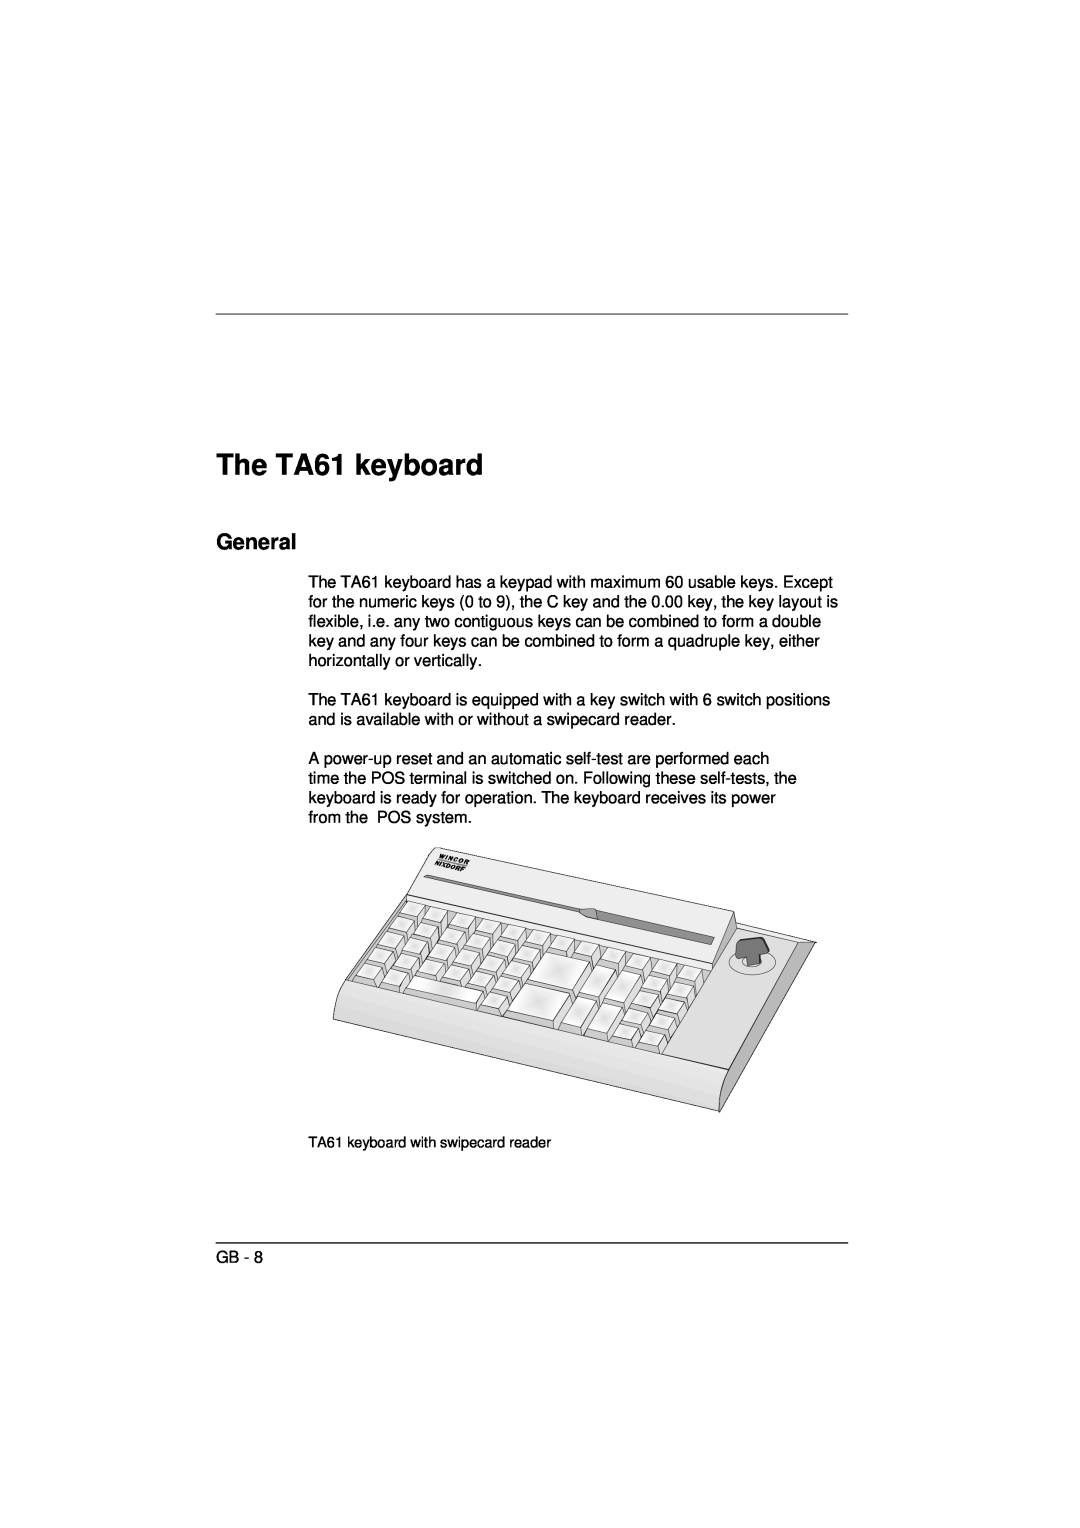 Microsoft manual The TA61 keyboard, General 